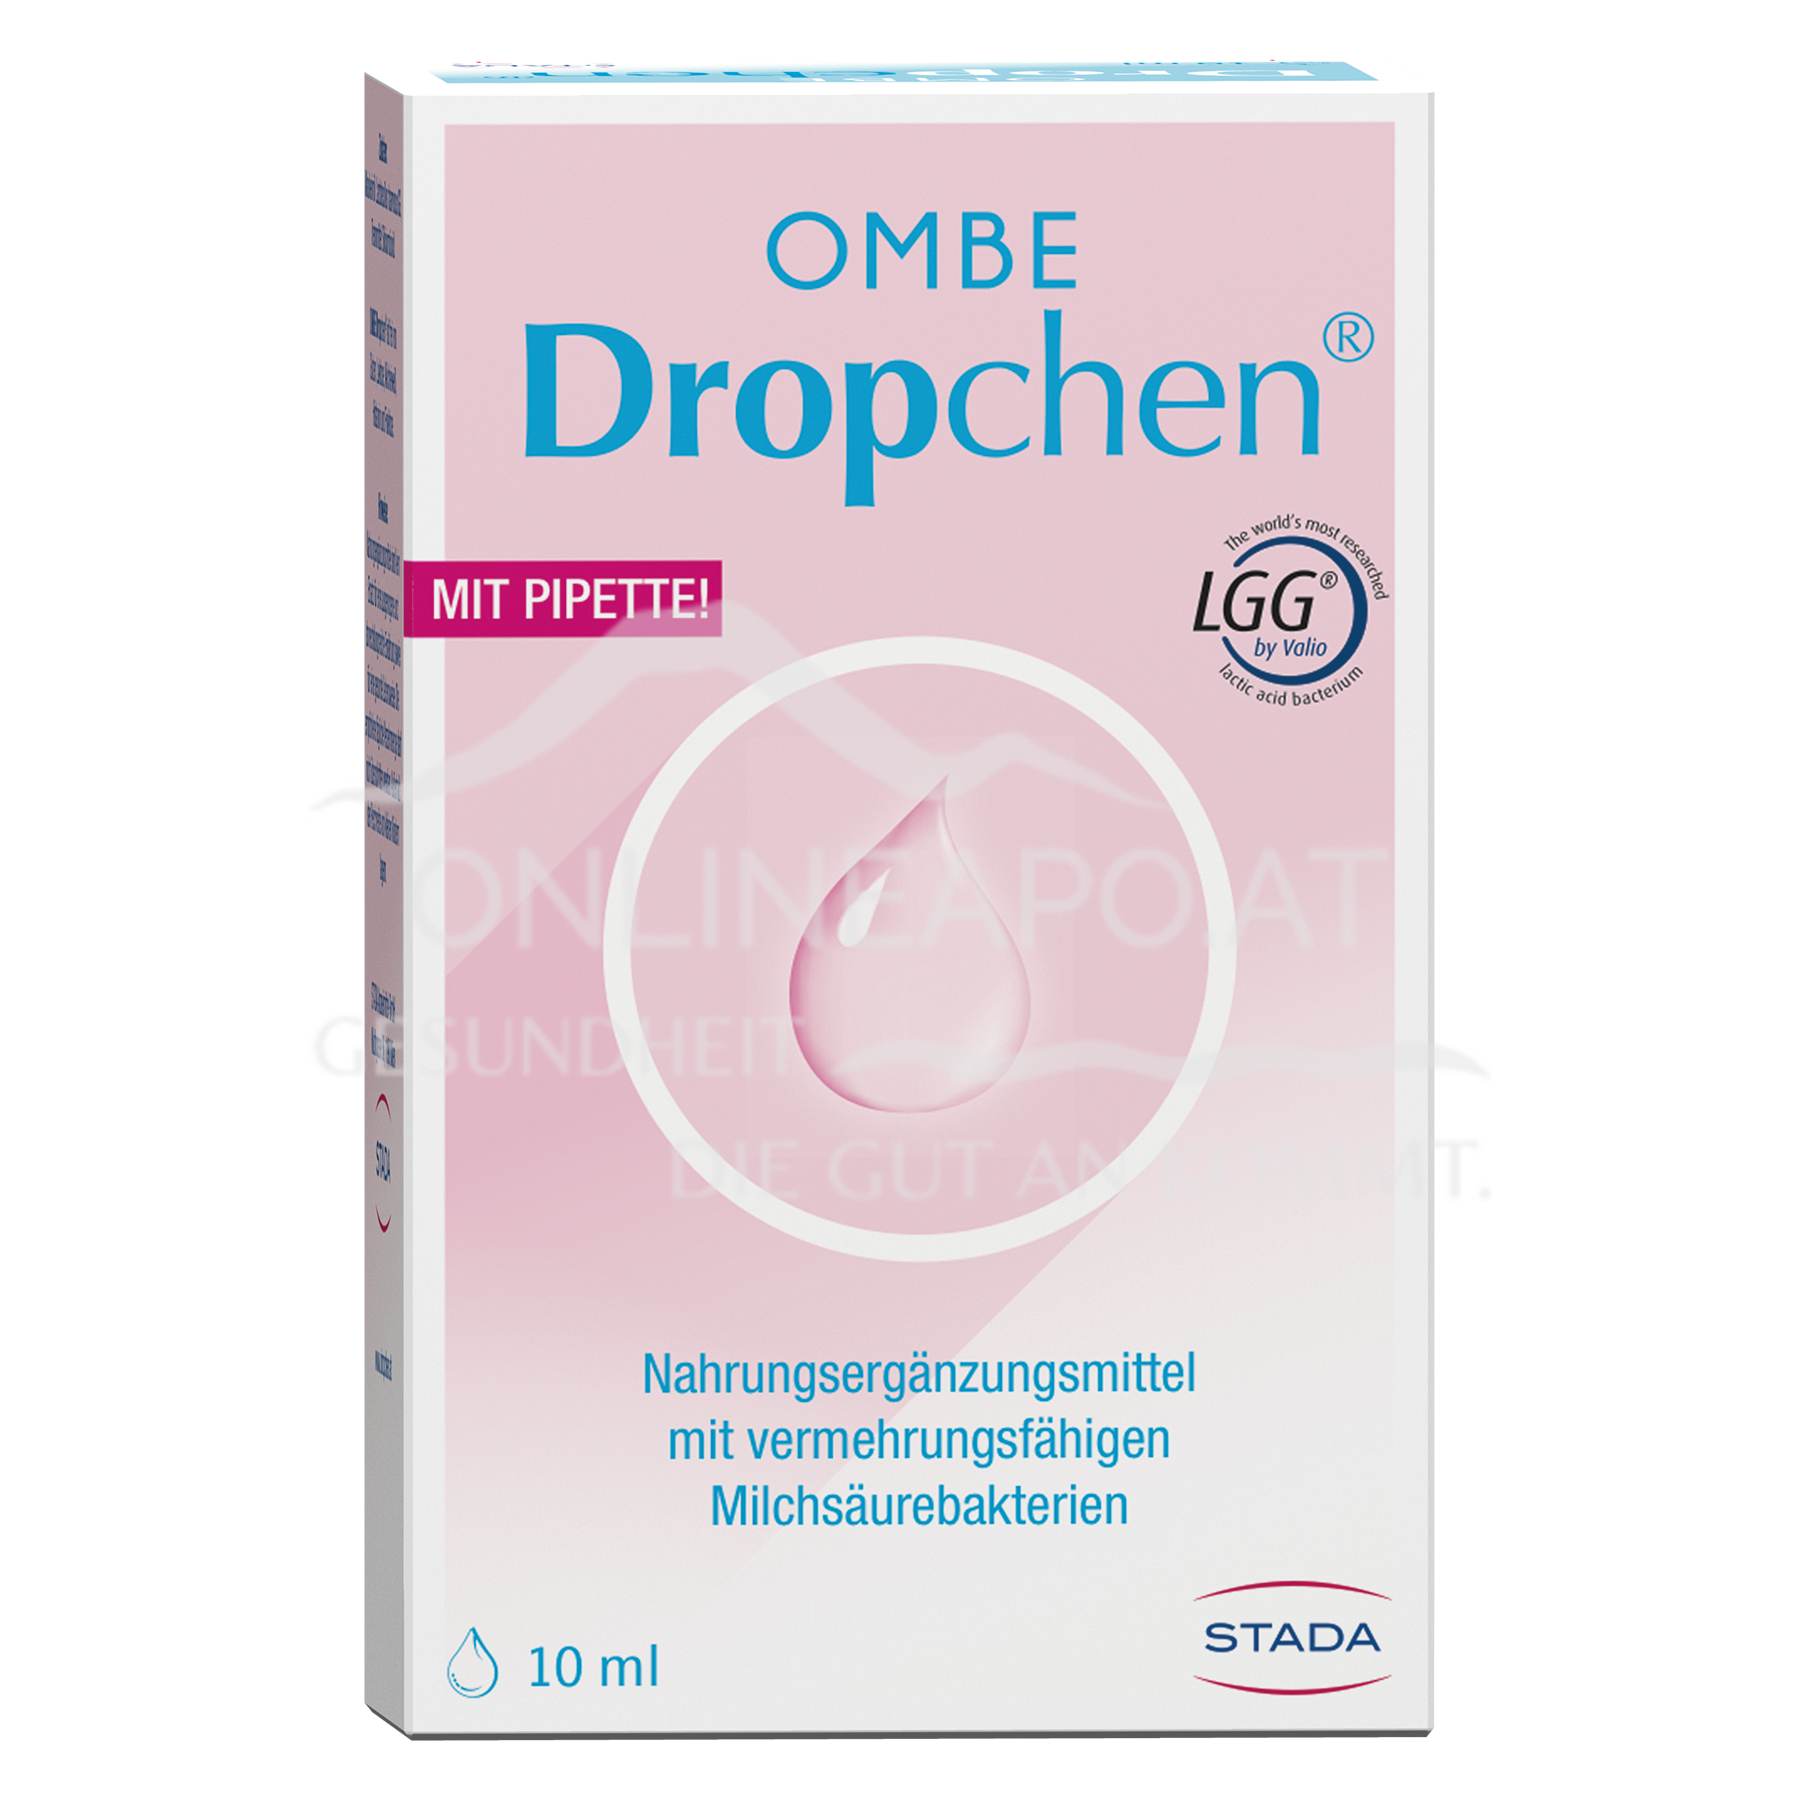 OMBE Dropchen®